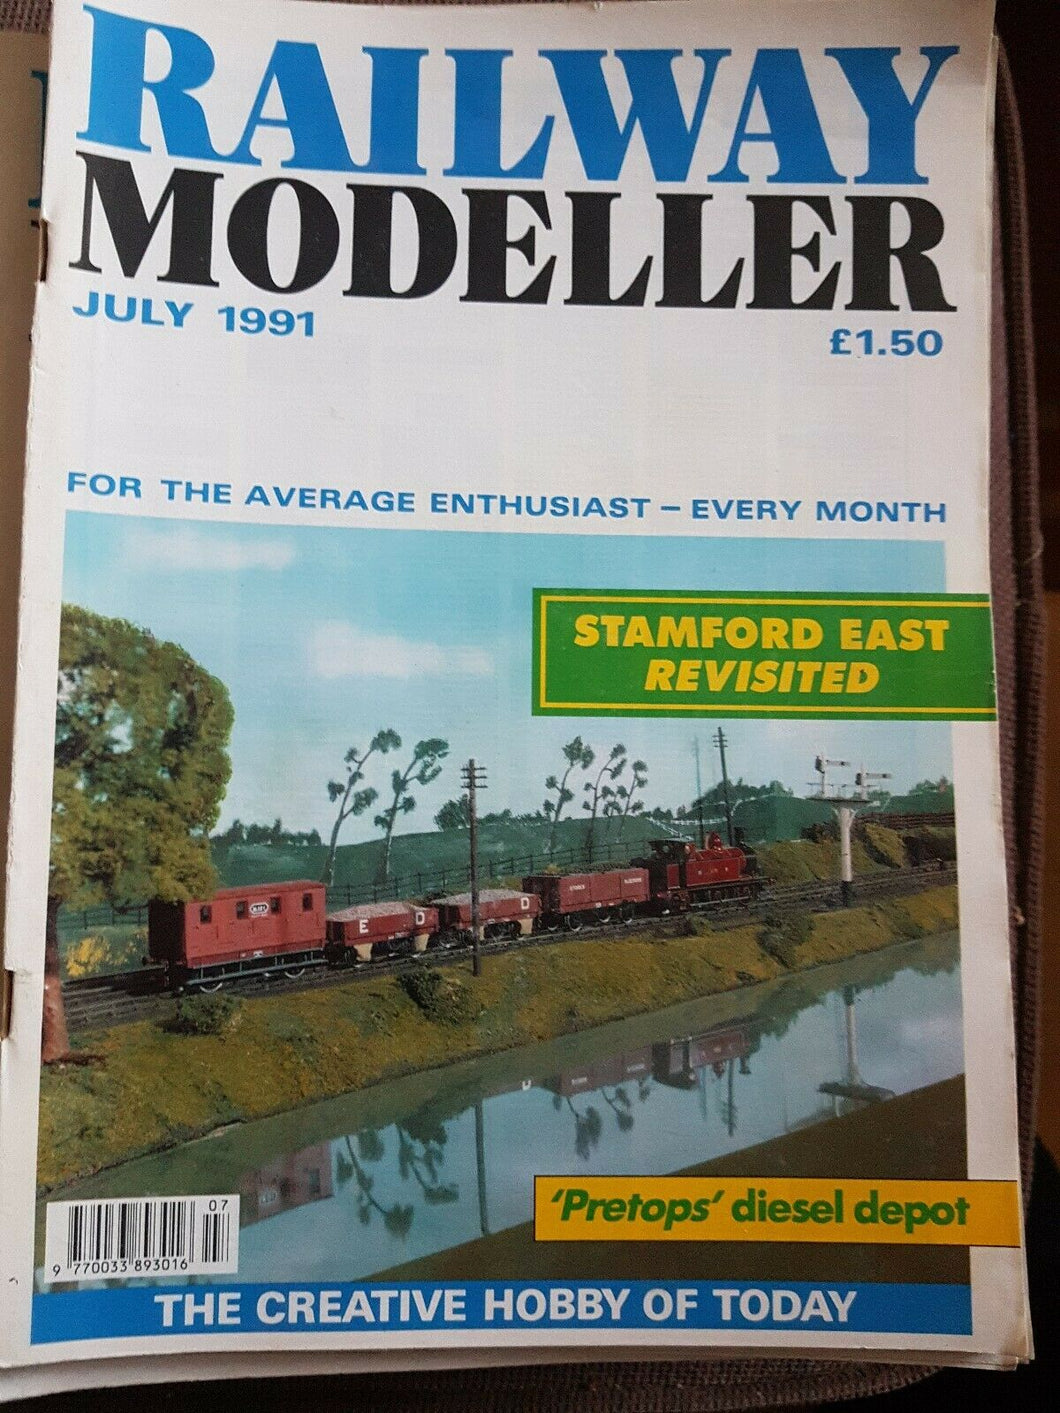 Railway modeller magazine July 1991